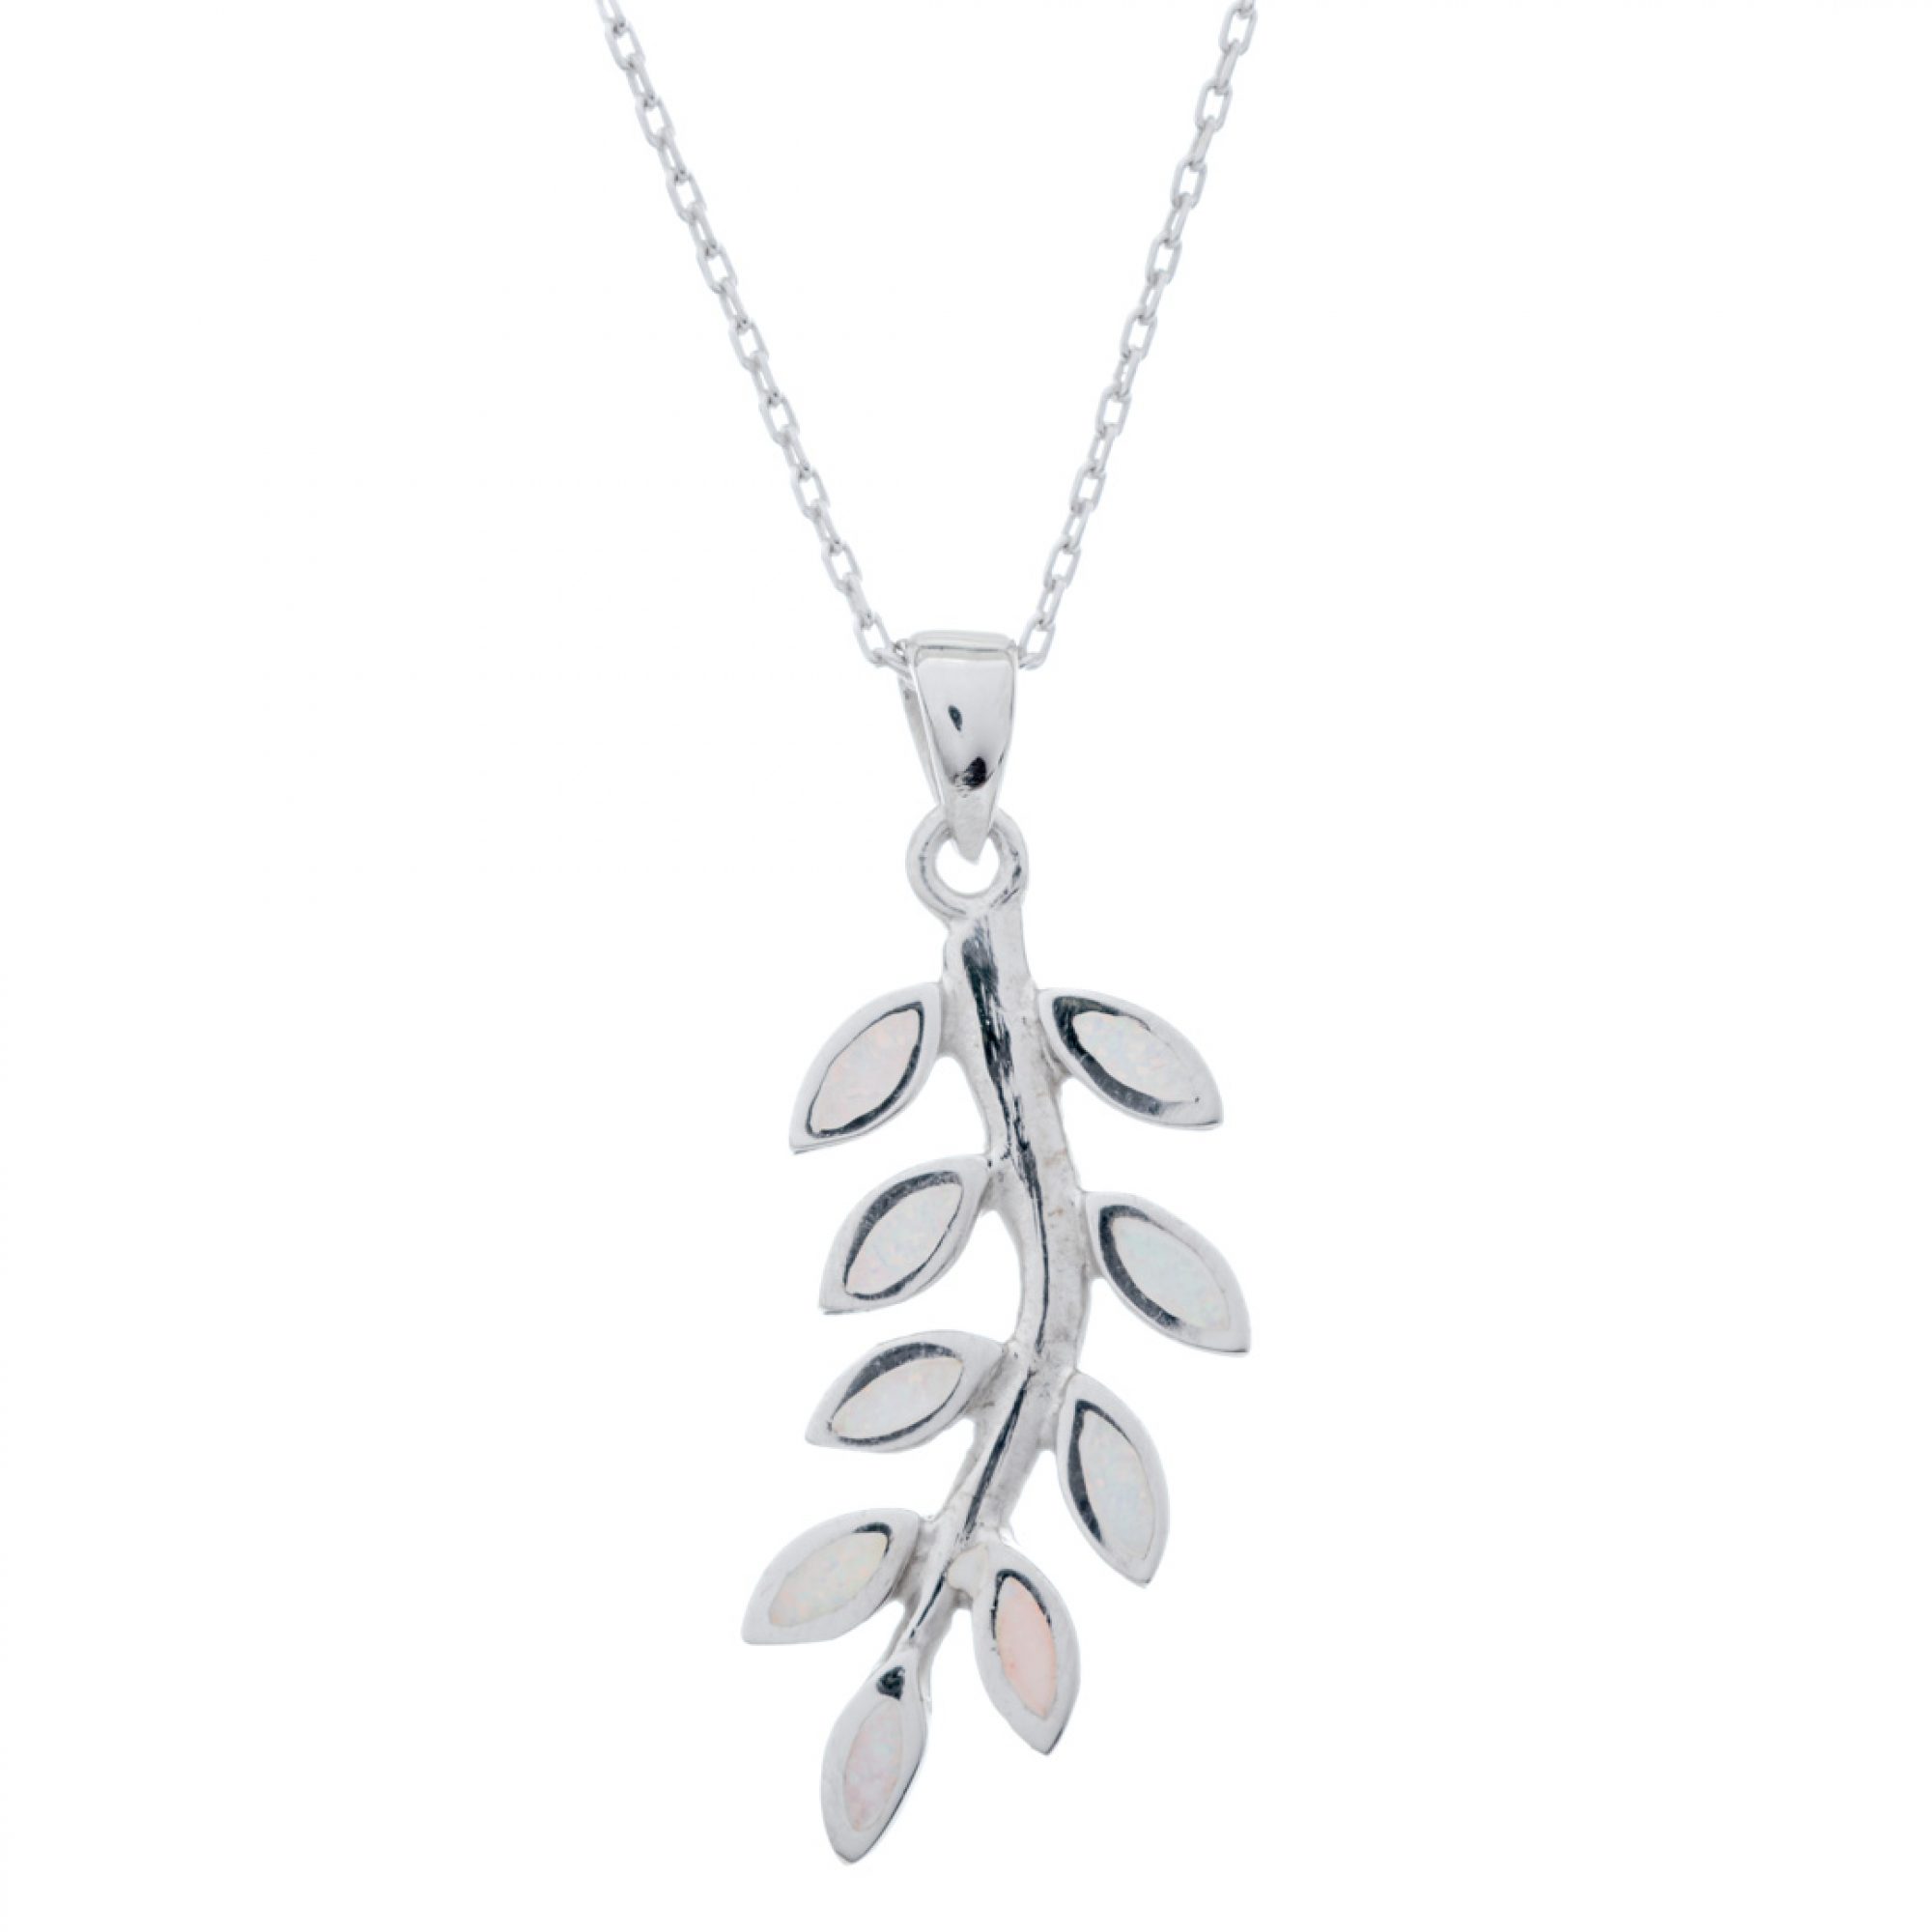 White opal olive branch pendant